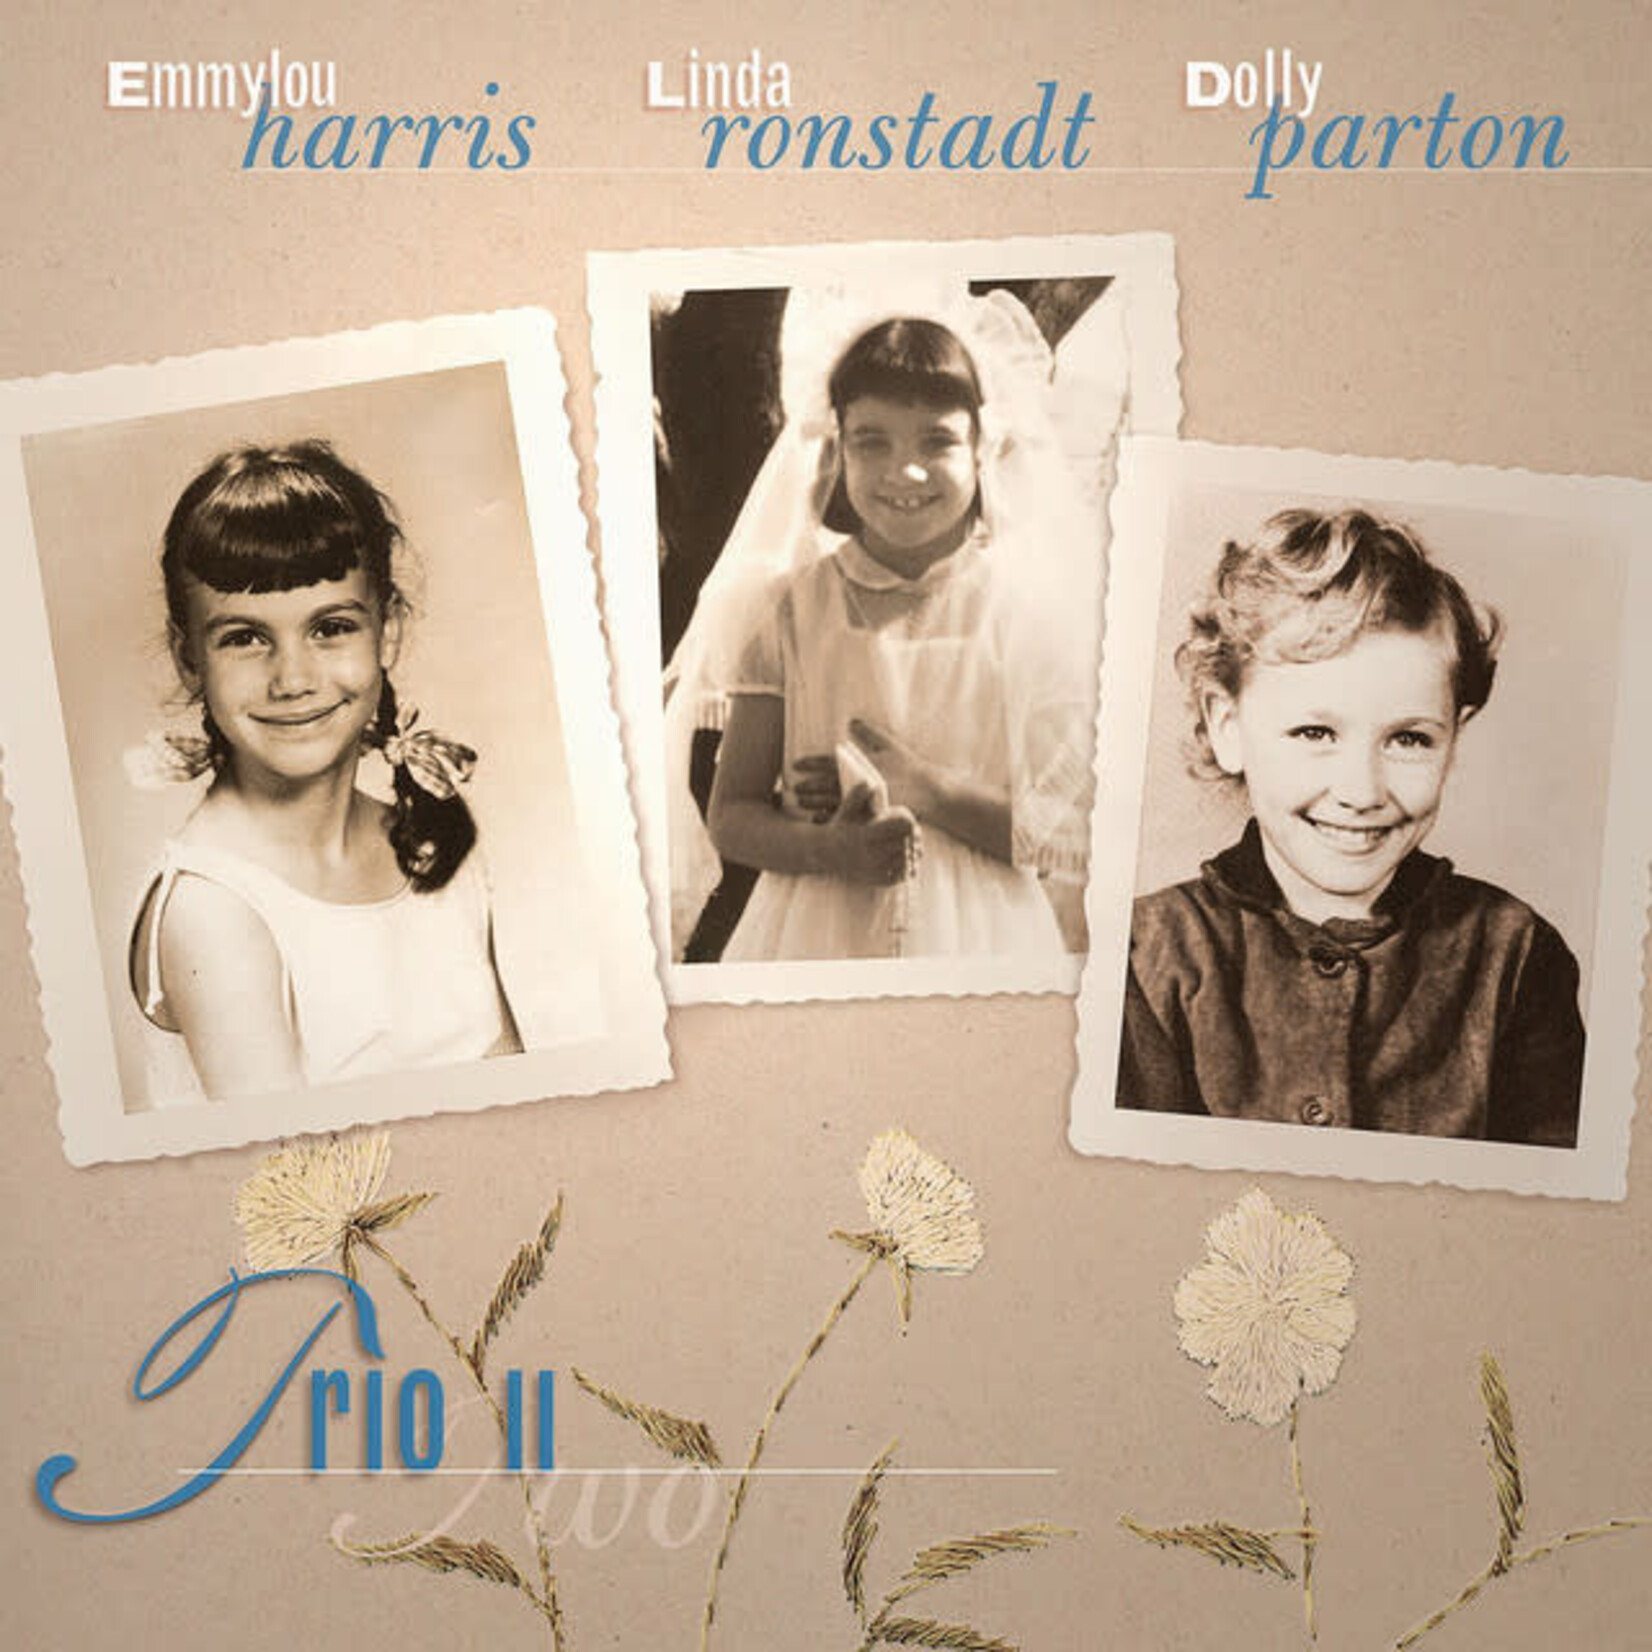 Dolly Parton/Emmylou Harris/Linda Ronstadt - Trio II [USED CD]